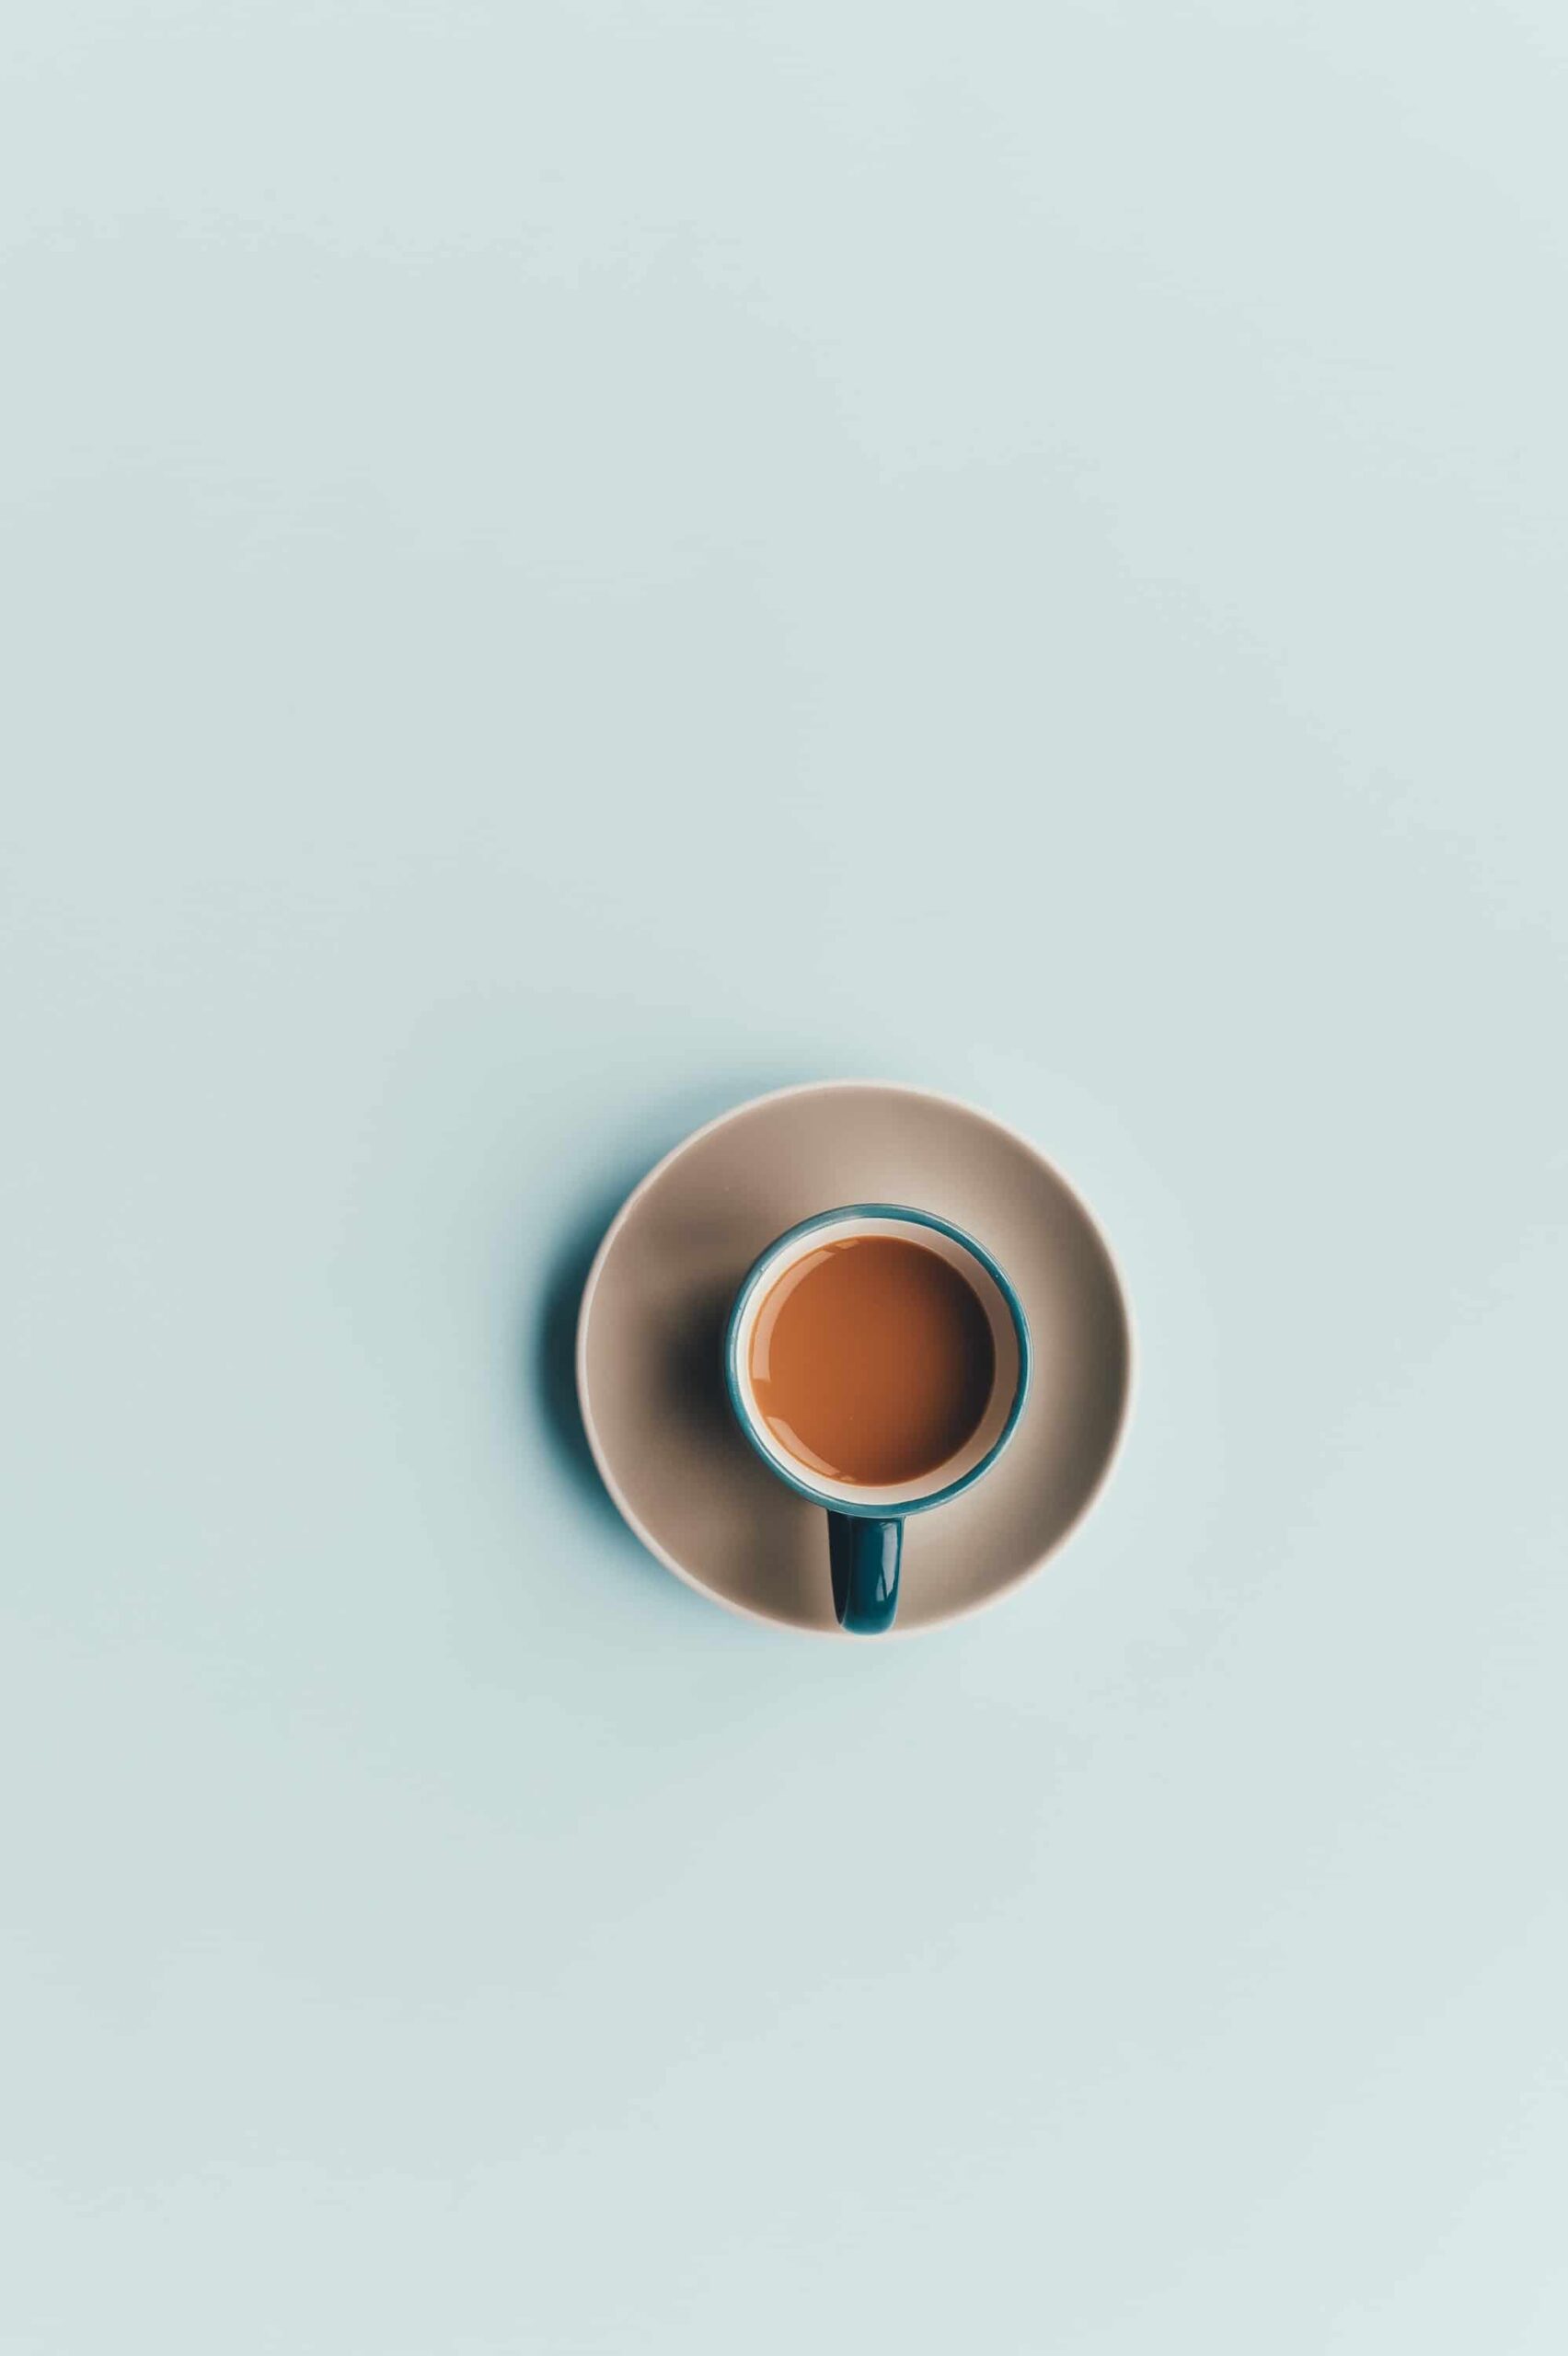 kaffee yerba mate kaffee ersatz bio mate online kaufen